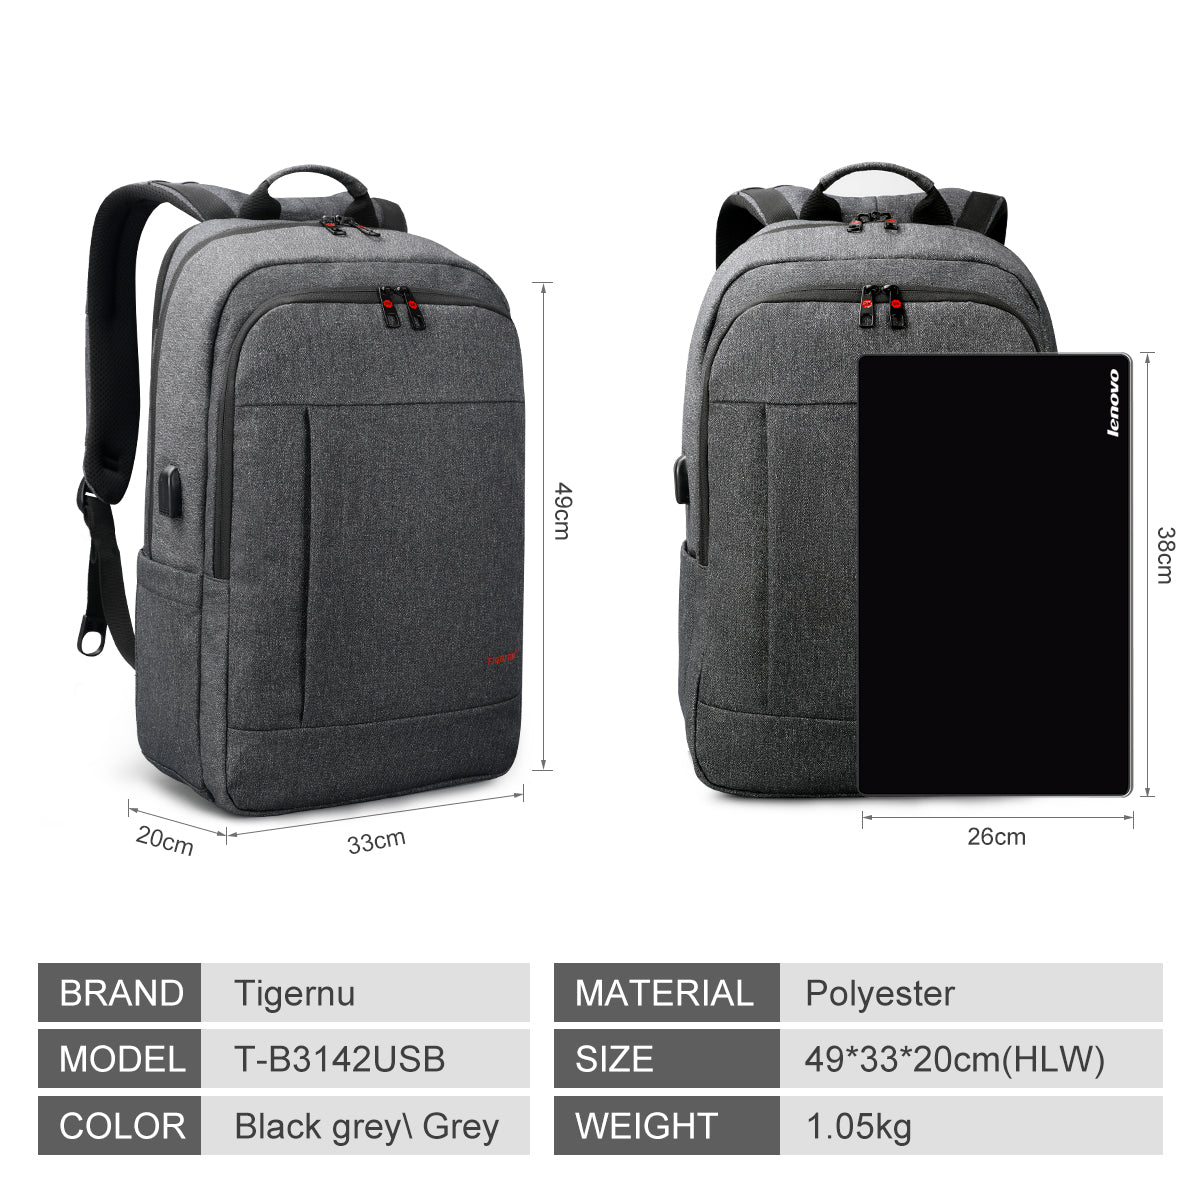 Lifetime warranty, men's anti-theft bag 15.6-19 inches, laptop backpack, shoulder bag, youth school travel backpack, direct supply